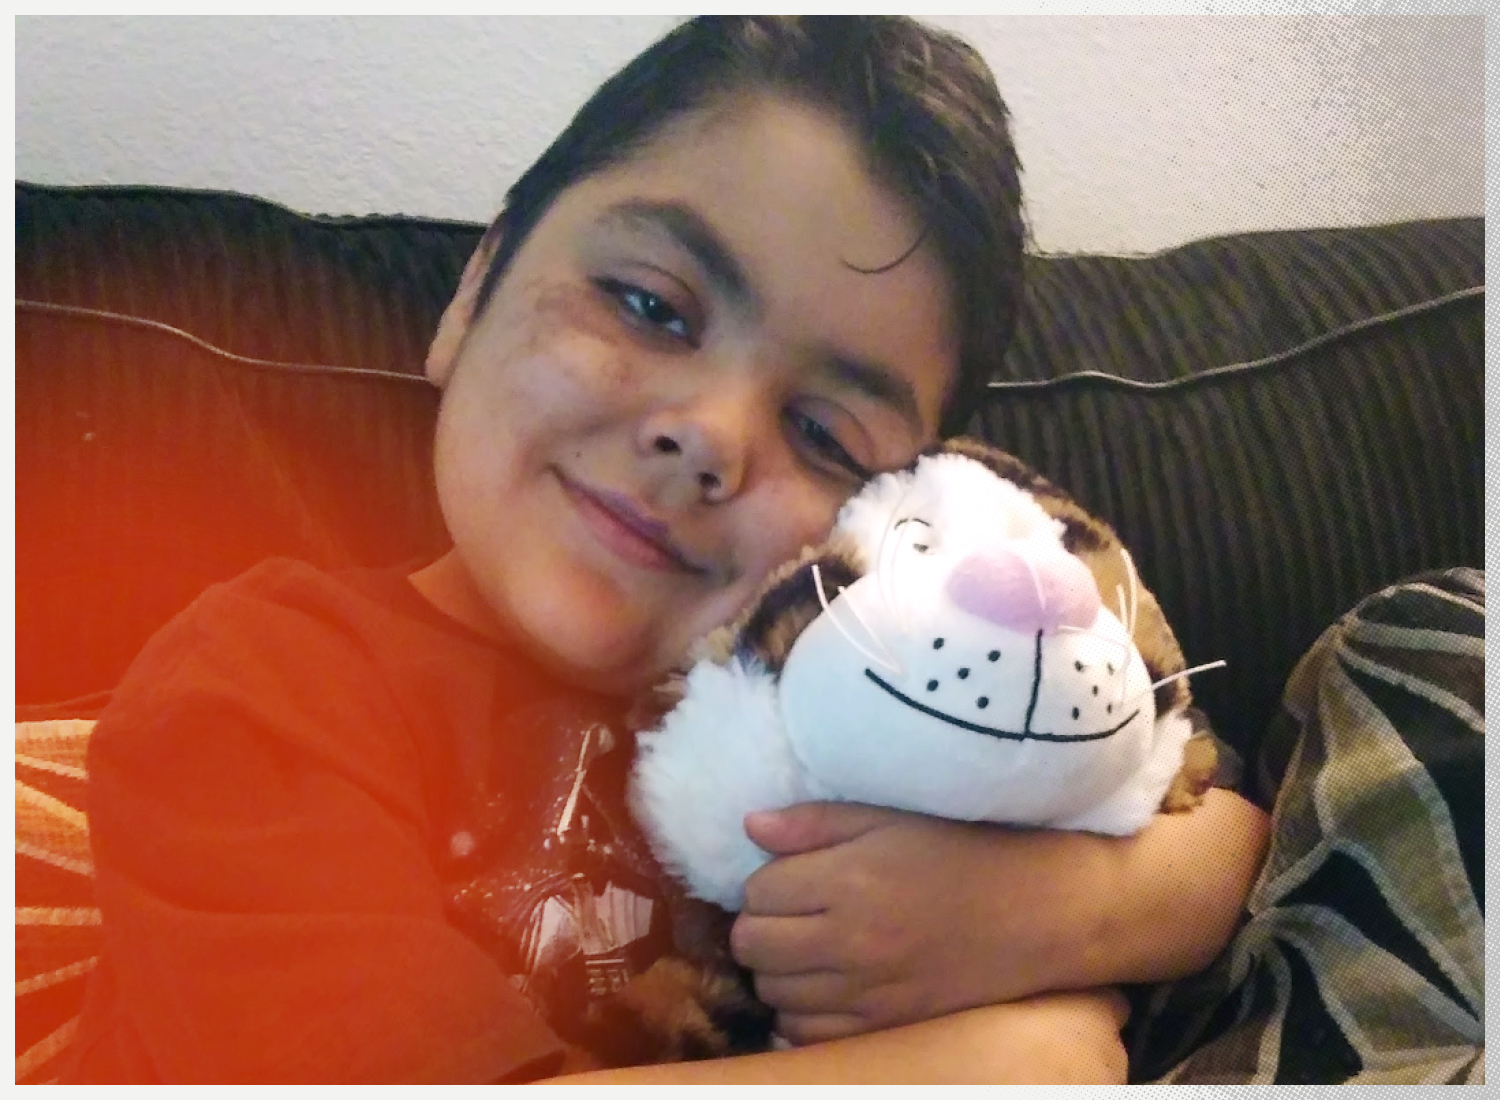 Dario hugs his stuffed animal